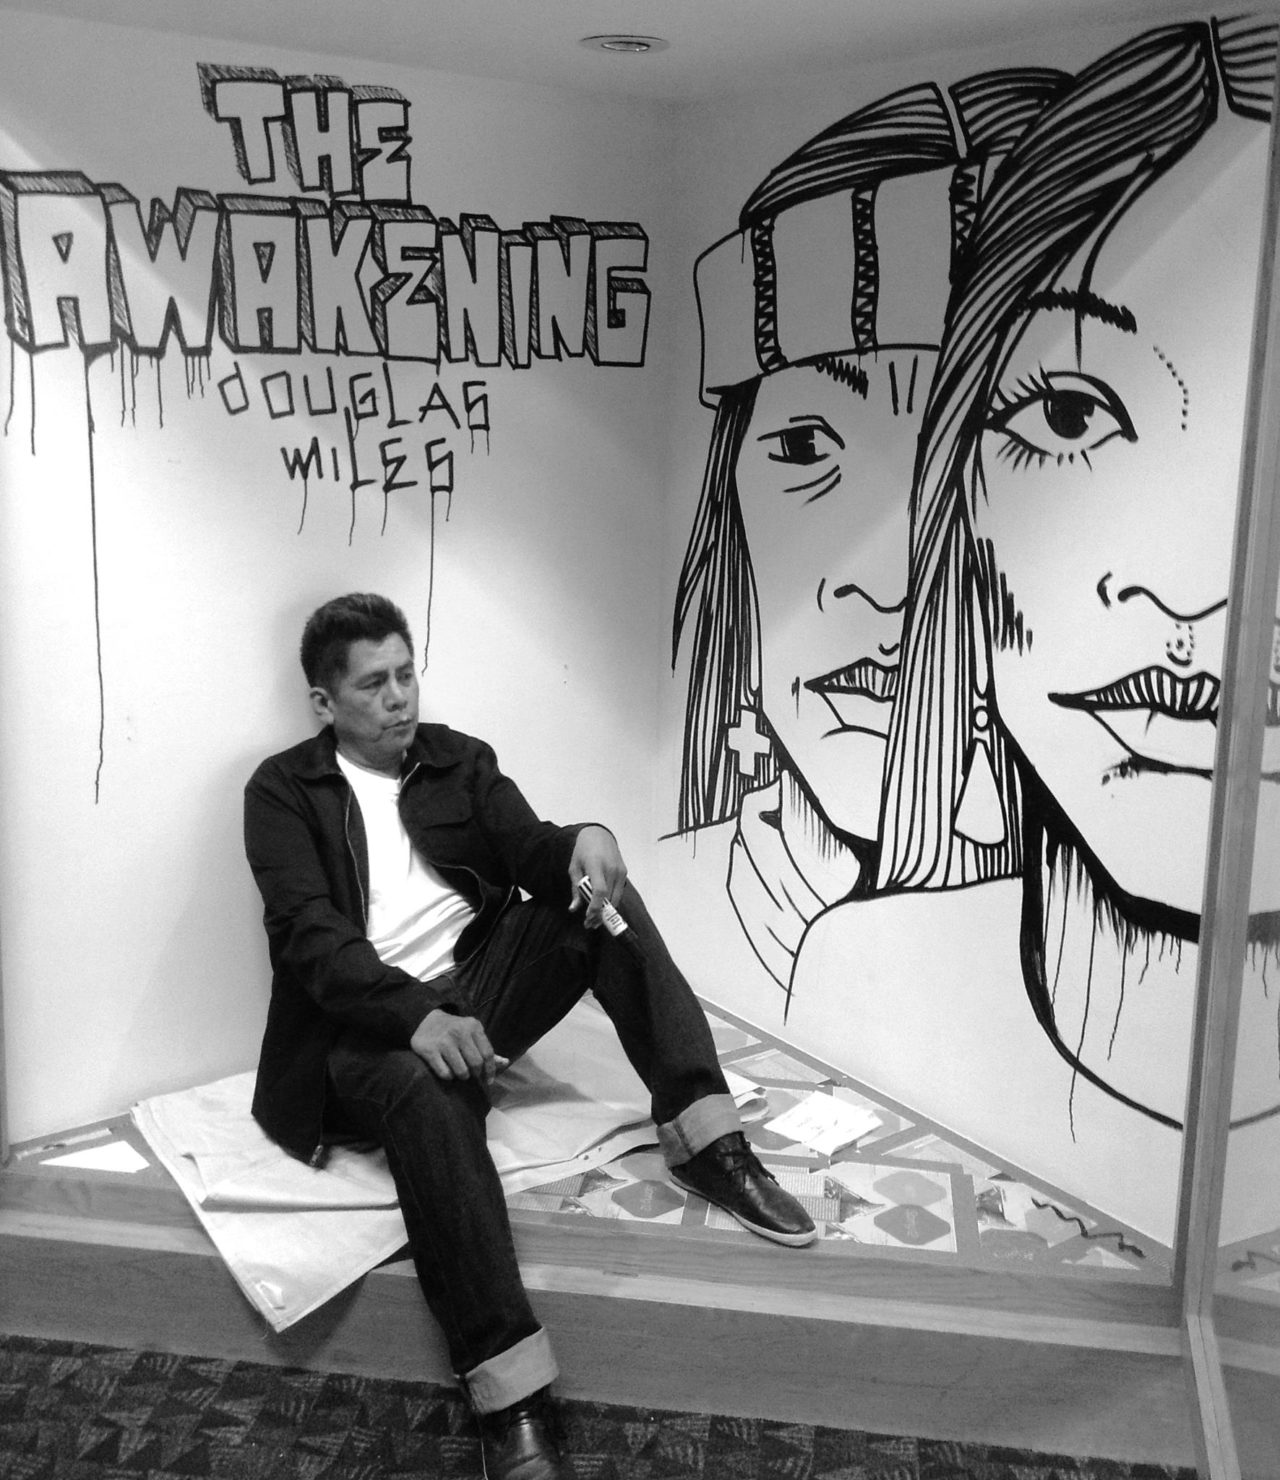 Douglas Miles at his opening for "The Awakening" exhibit opening